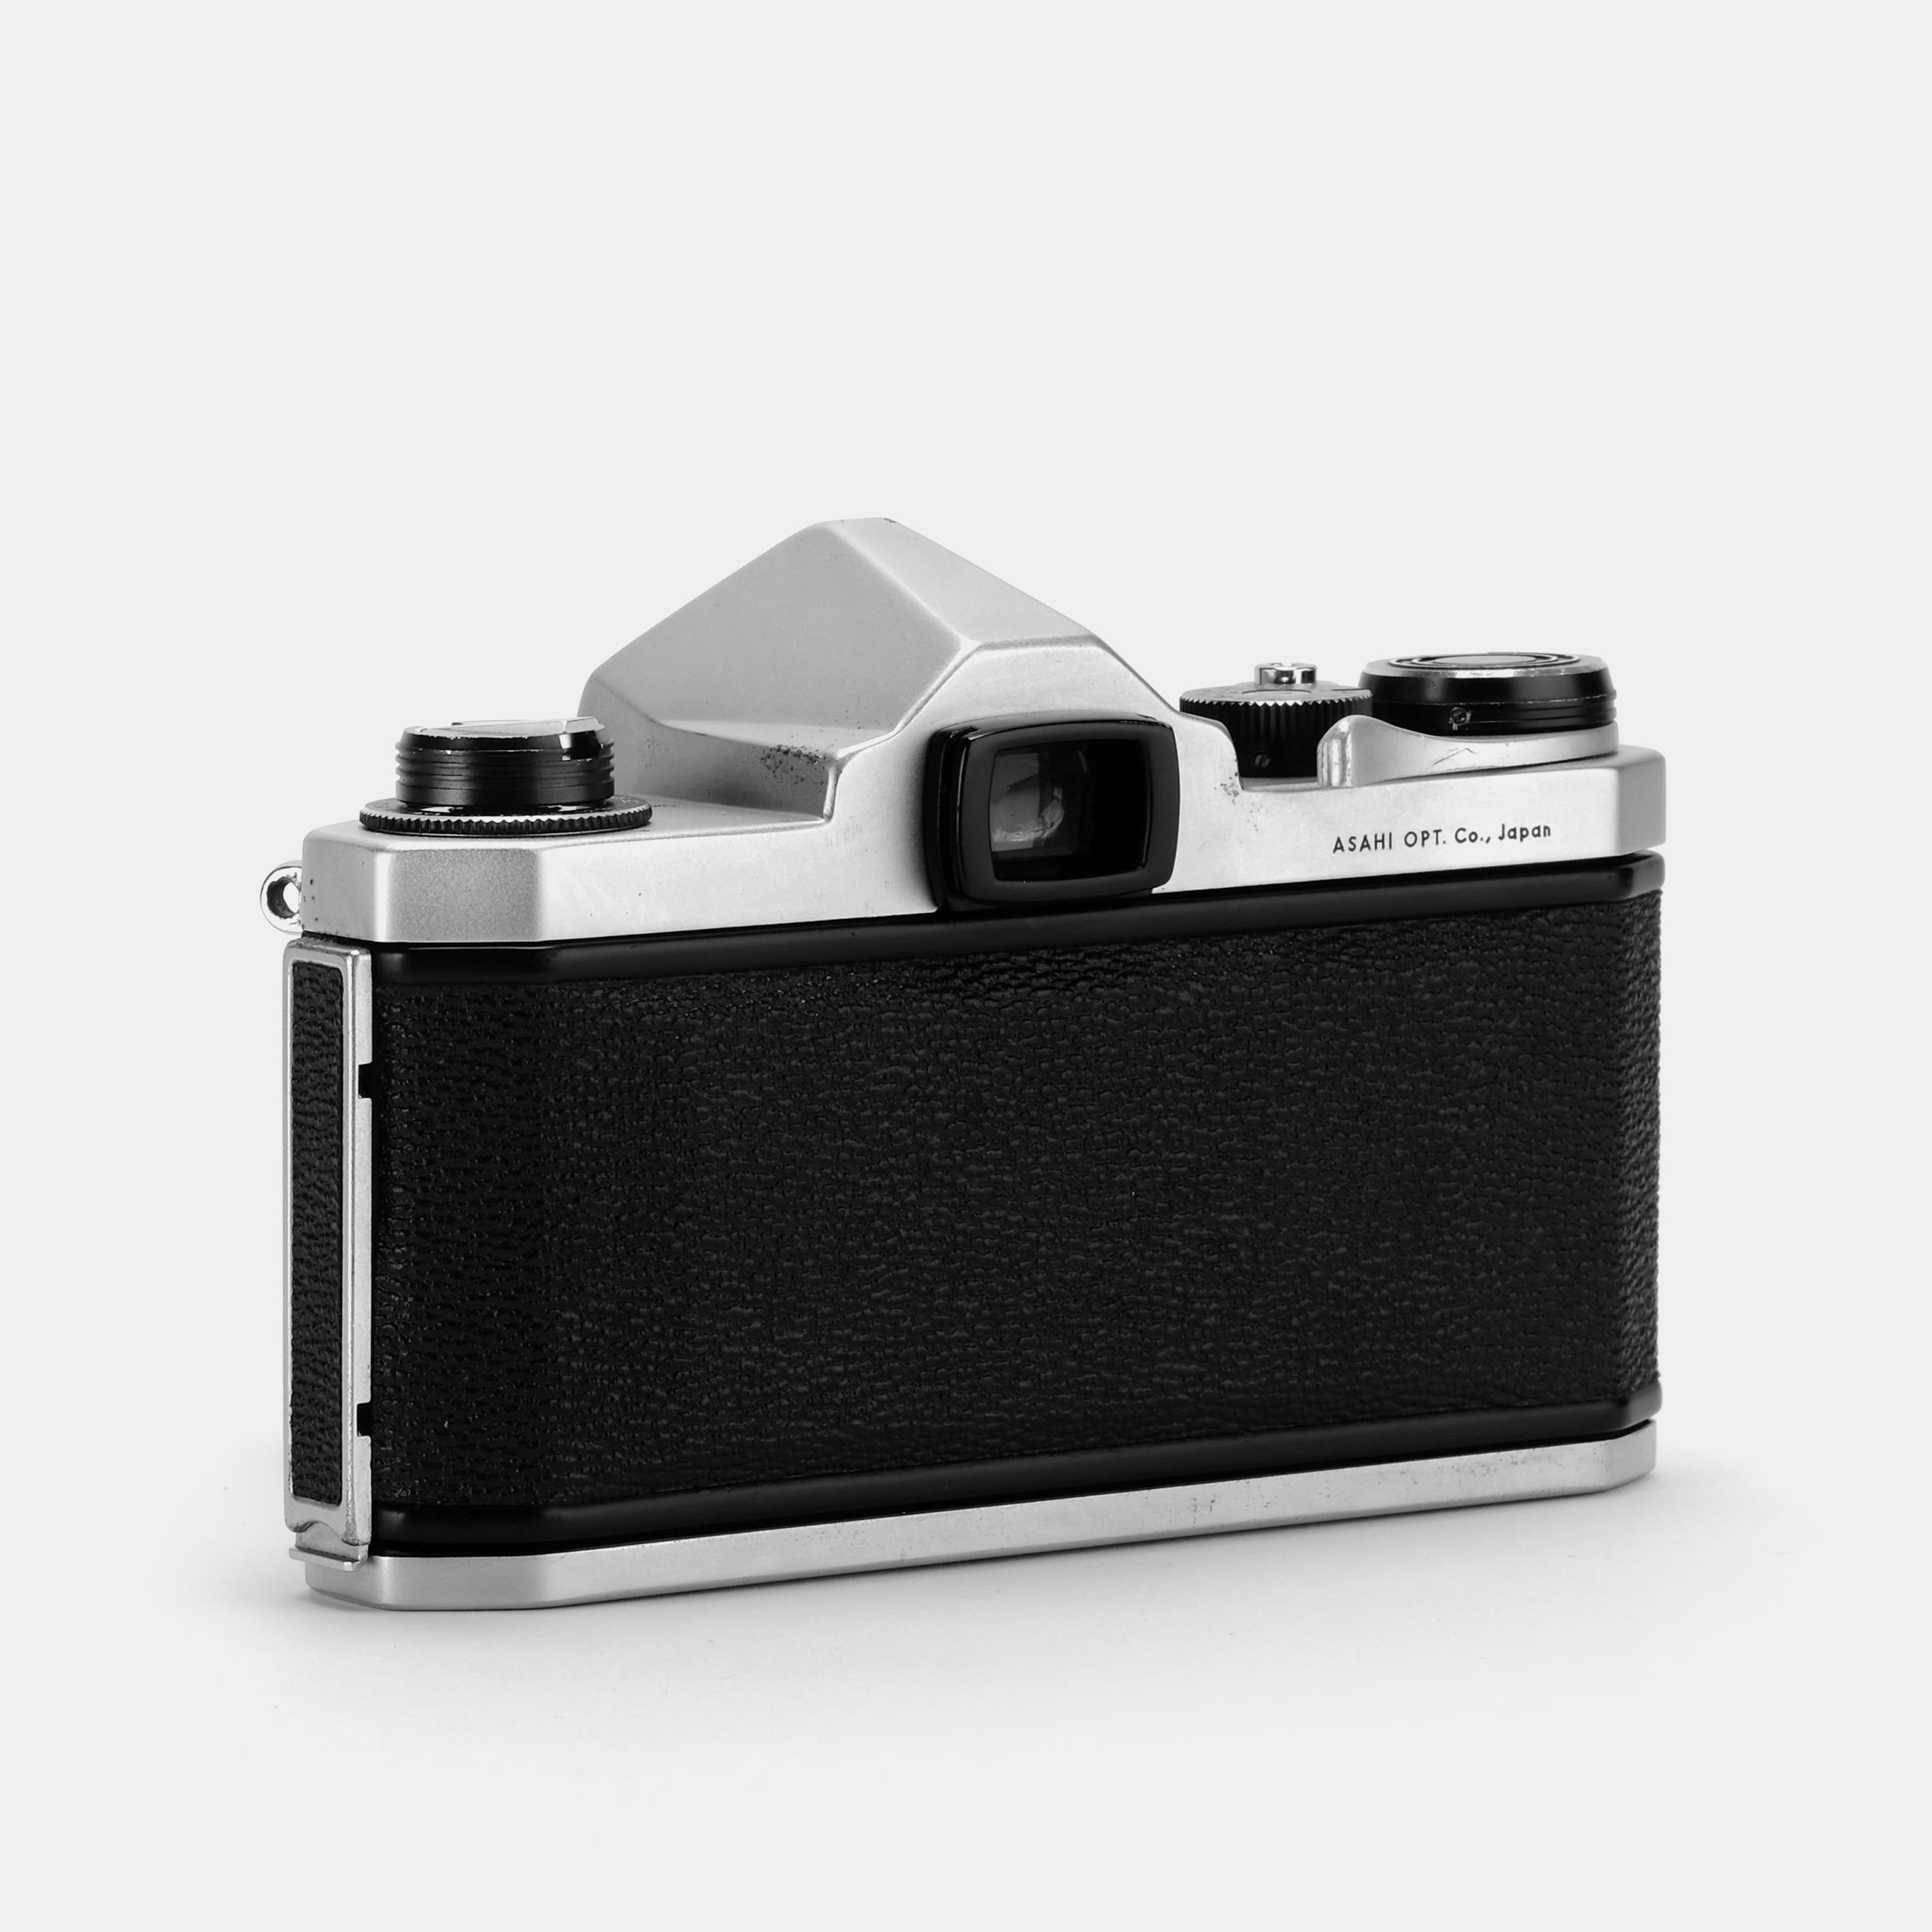 Honeywell Pentax H1a 35mm SLR Film Camera